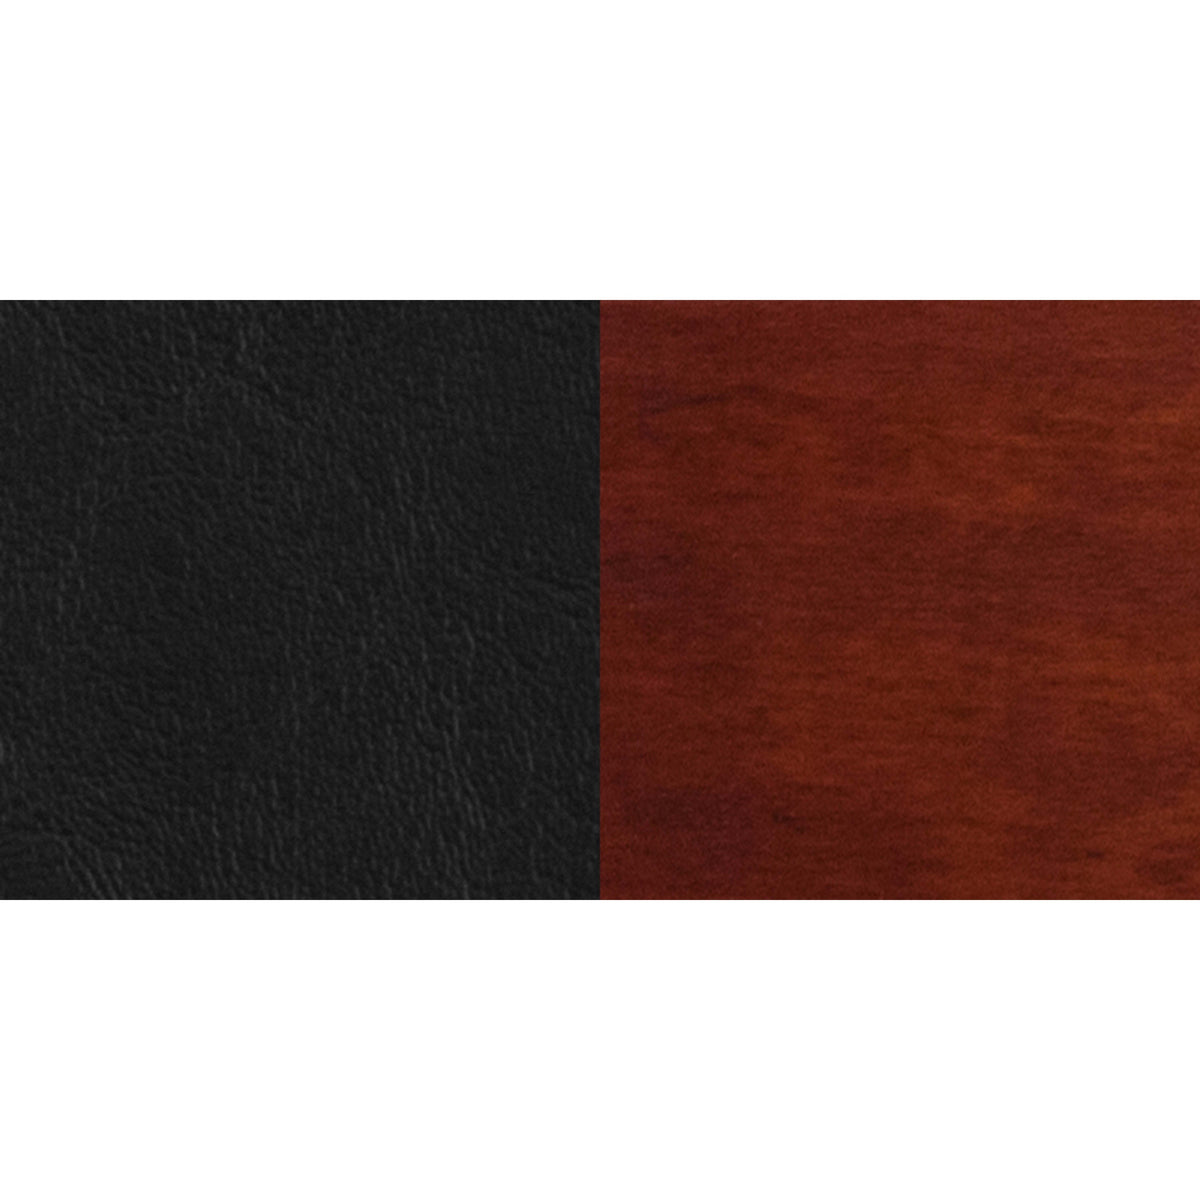 Black Vinyl Seat/Mahogany Wood Frame |#| Slat Back Mahogany Wood Restaurant Chair - Black Vinyl Seat